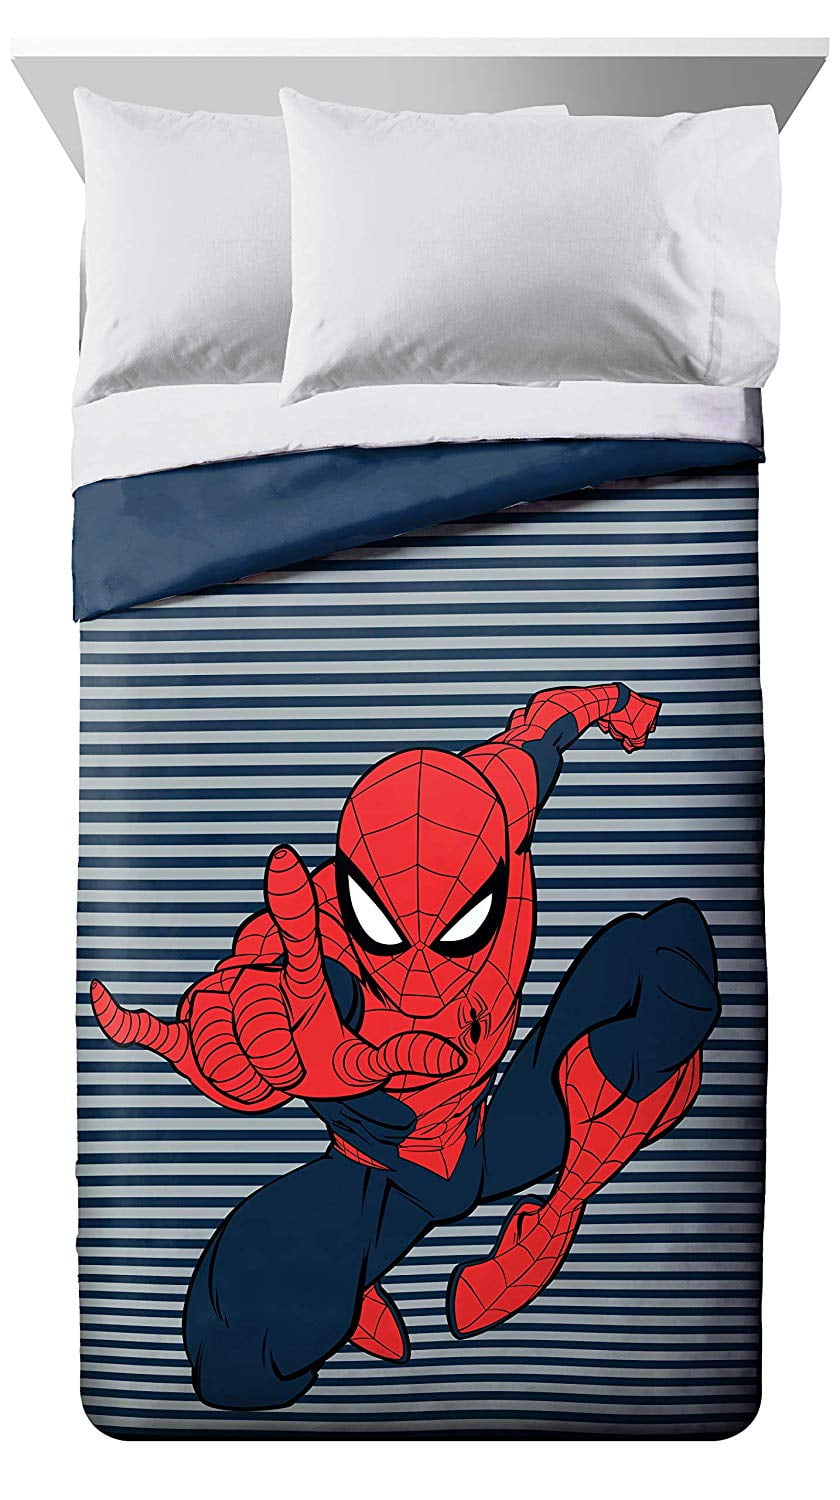 Details about   Superhero Spider-Man Fitted Sheet 3PCS Bed Sheet & Pillowcase Fans Bedding set 